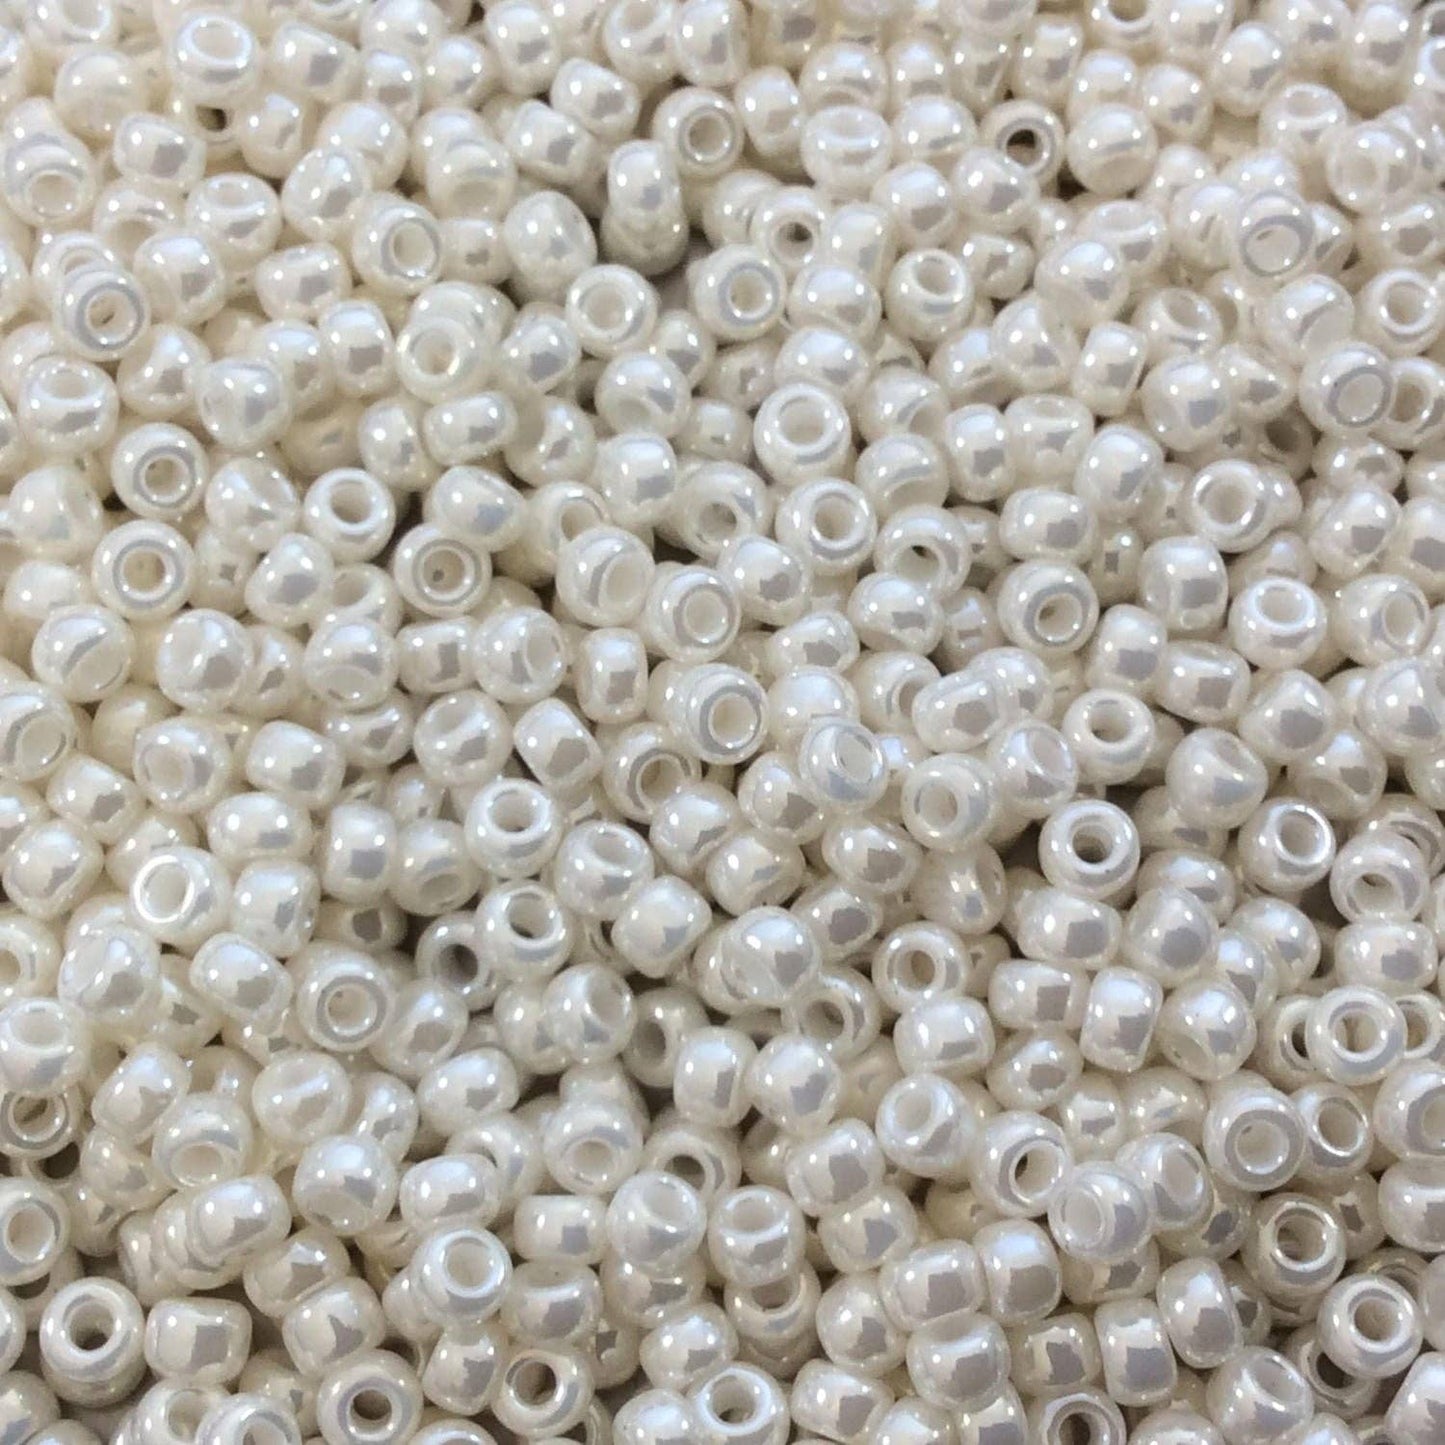 Size 8/0 Glossy Finish Ceylon Ivory Genuine Miyuki Glass Seed Beads - Sold by 22 Gram Tubes (Approx. 900 Beads per Tube) - (8-9592)